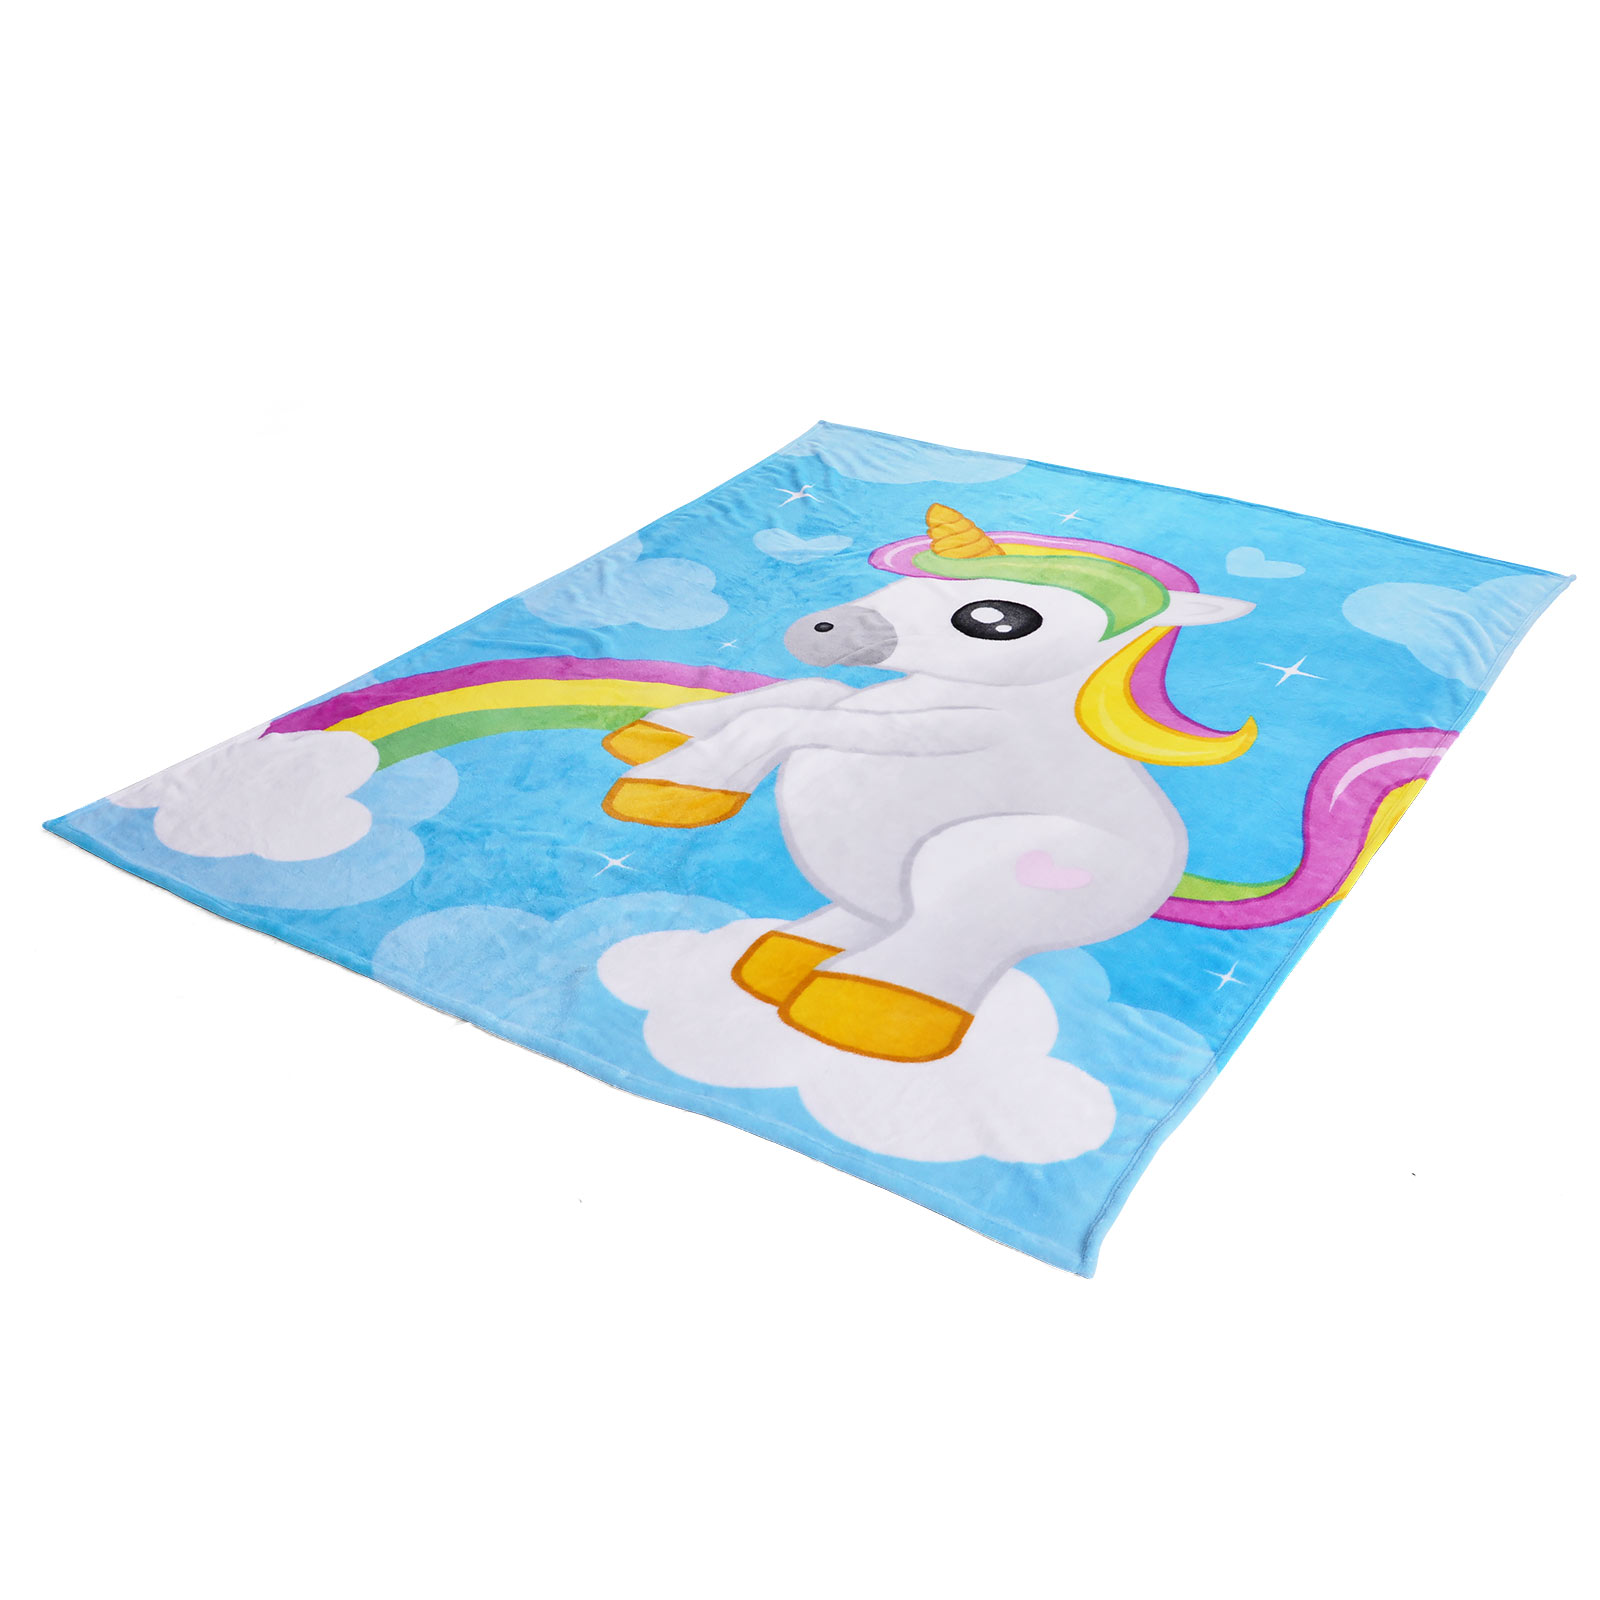 Fluffy blanket with unicorn